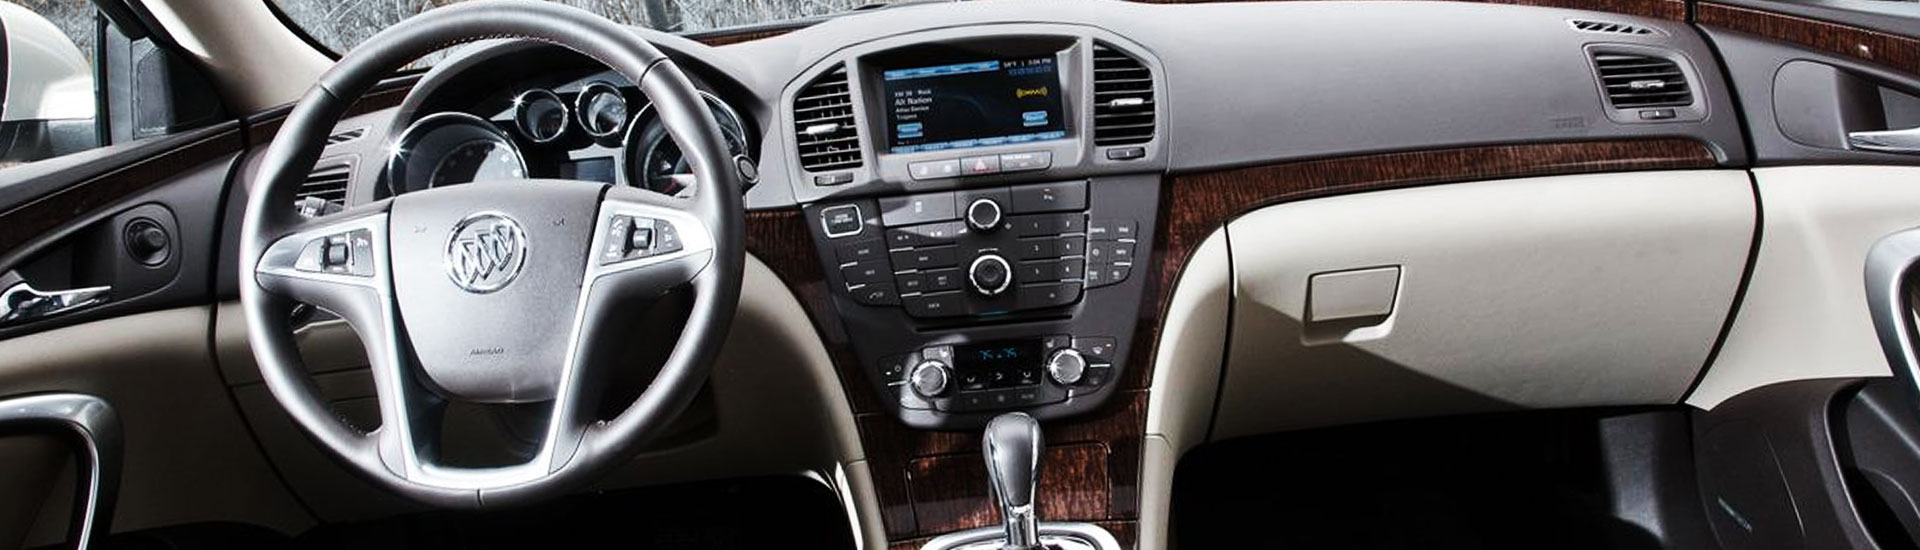 2014 Buick Regal Premium I 4dr Sedan - Research - GrooveCar